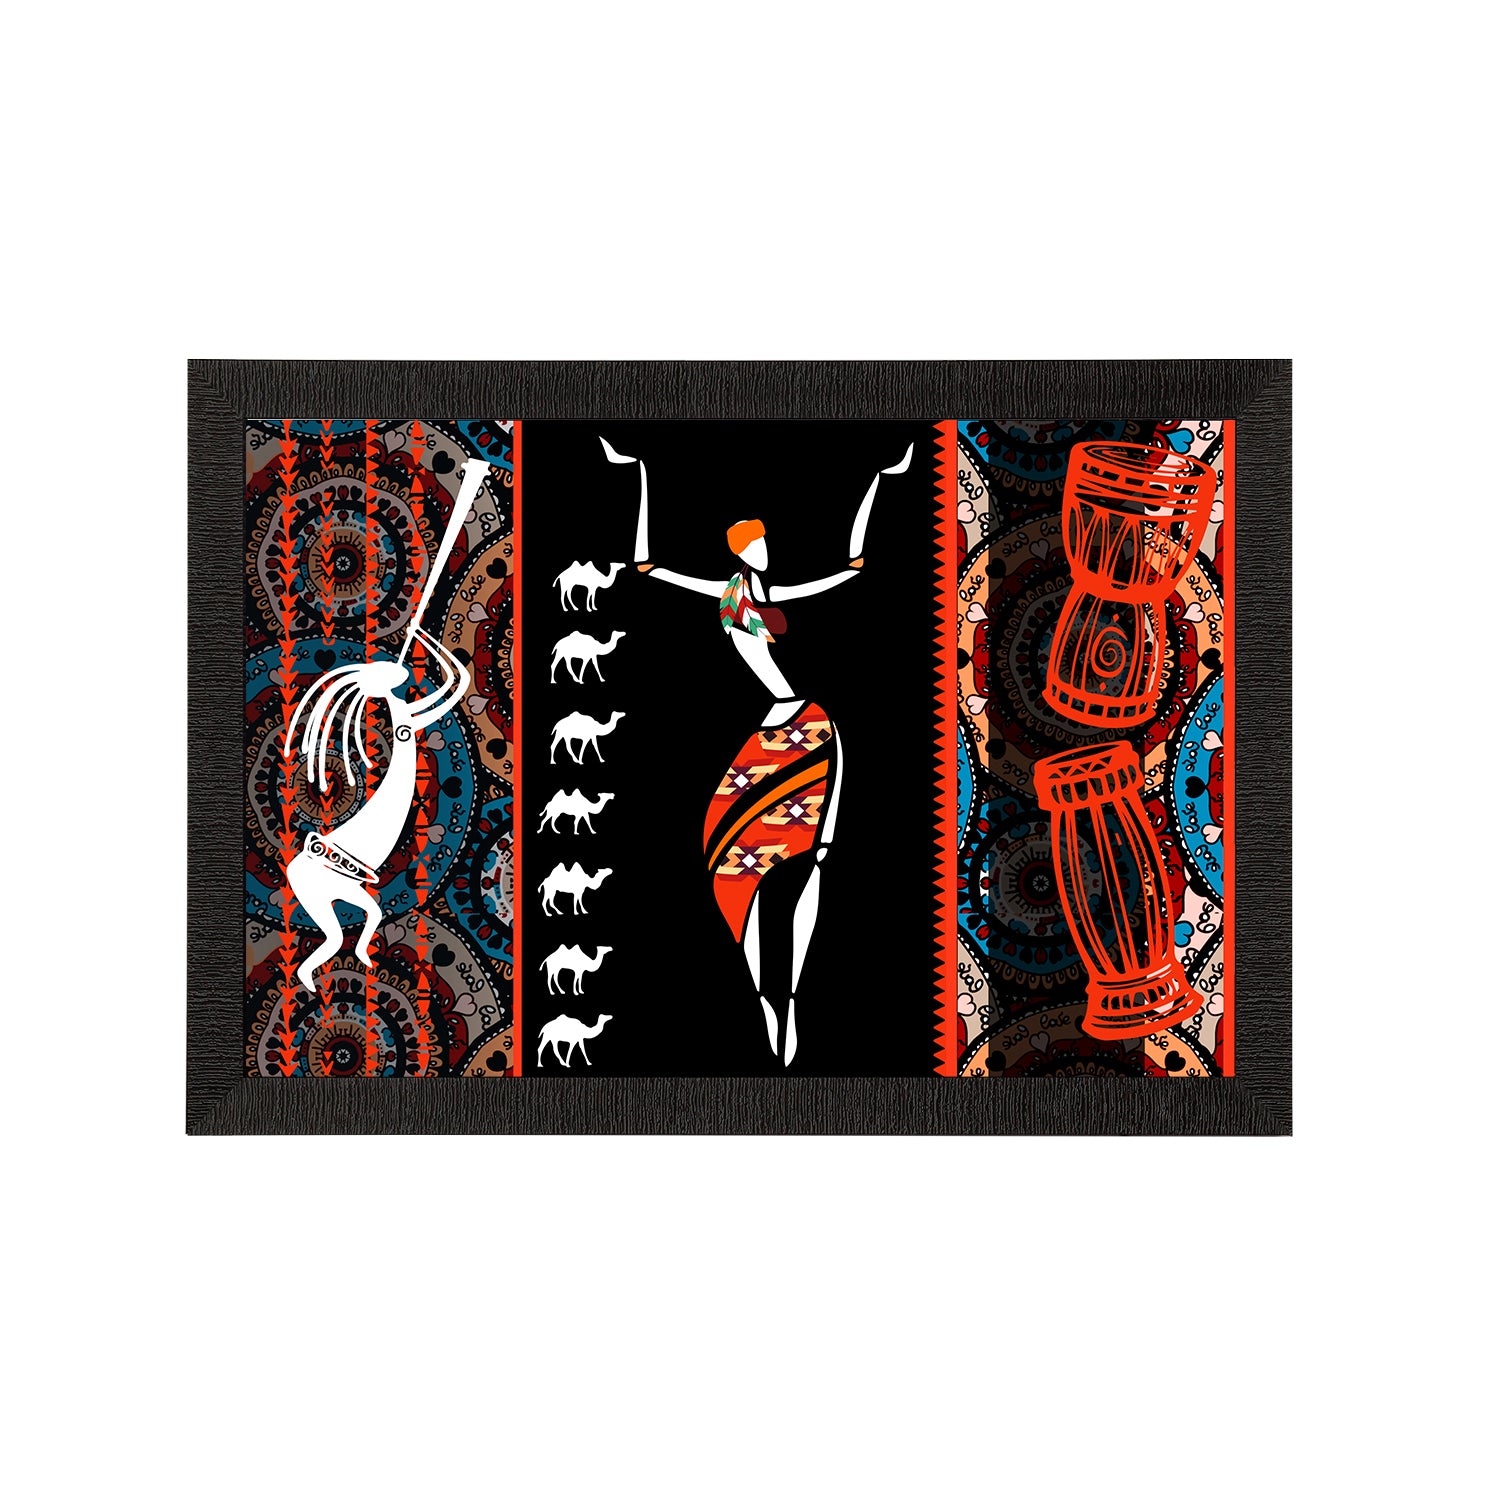 Tribal Theme Satin Matt Texture UV Art Painting